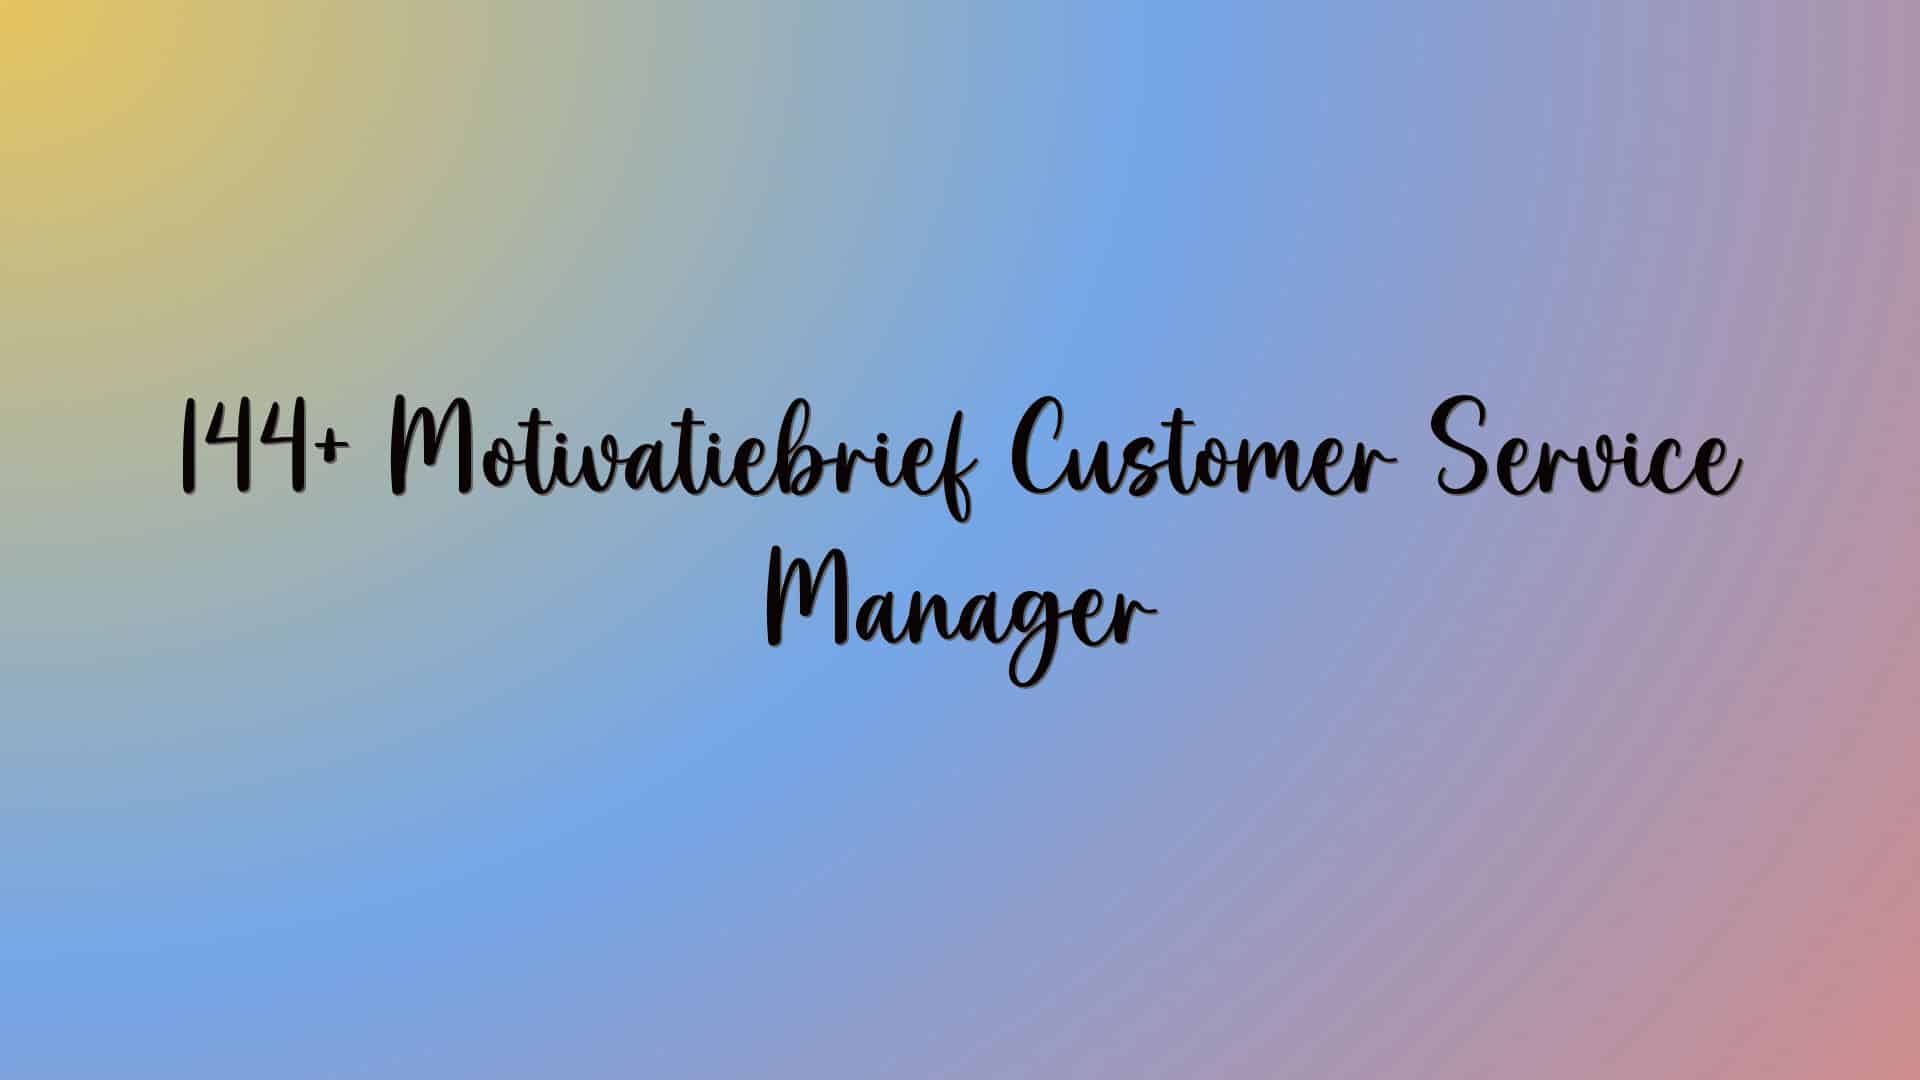 144+ Motivatiebrief Customer Service Manager